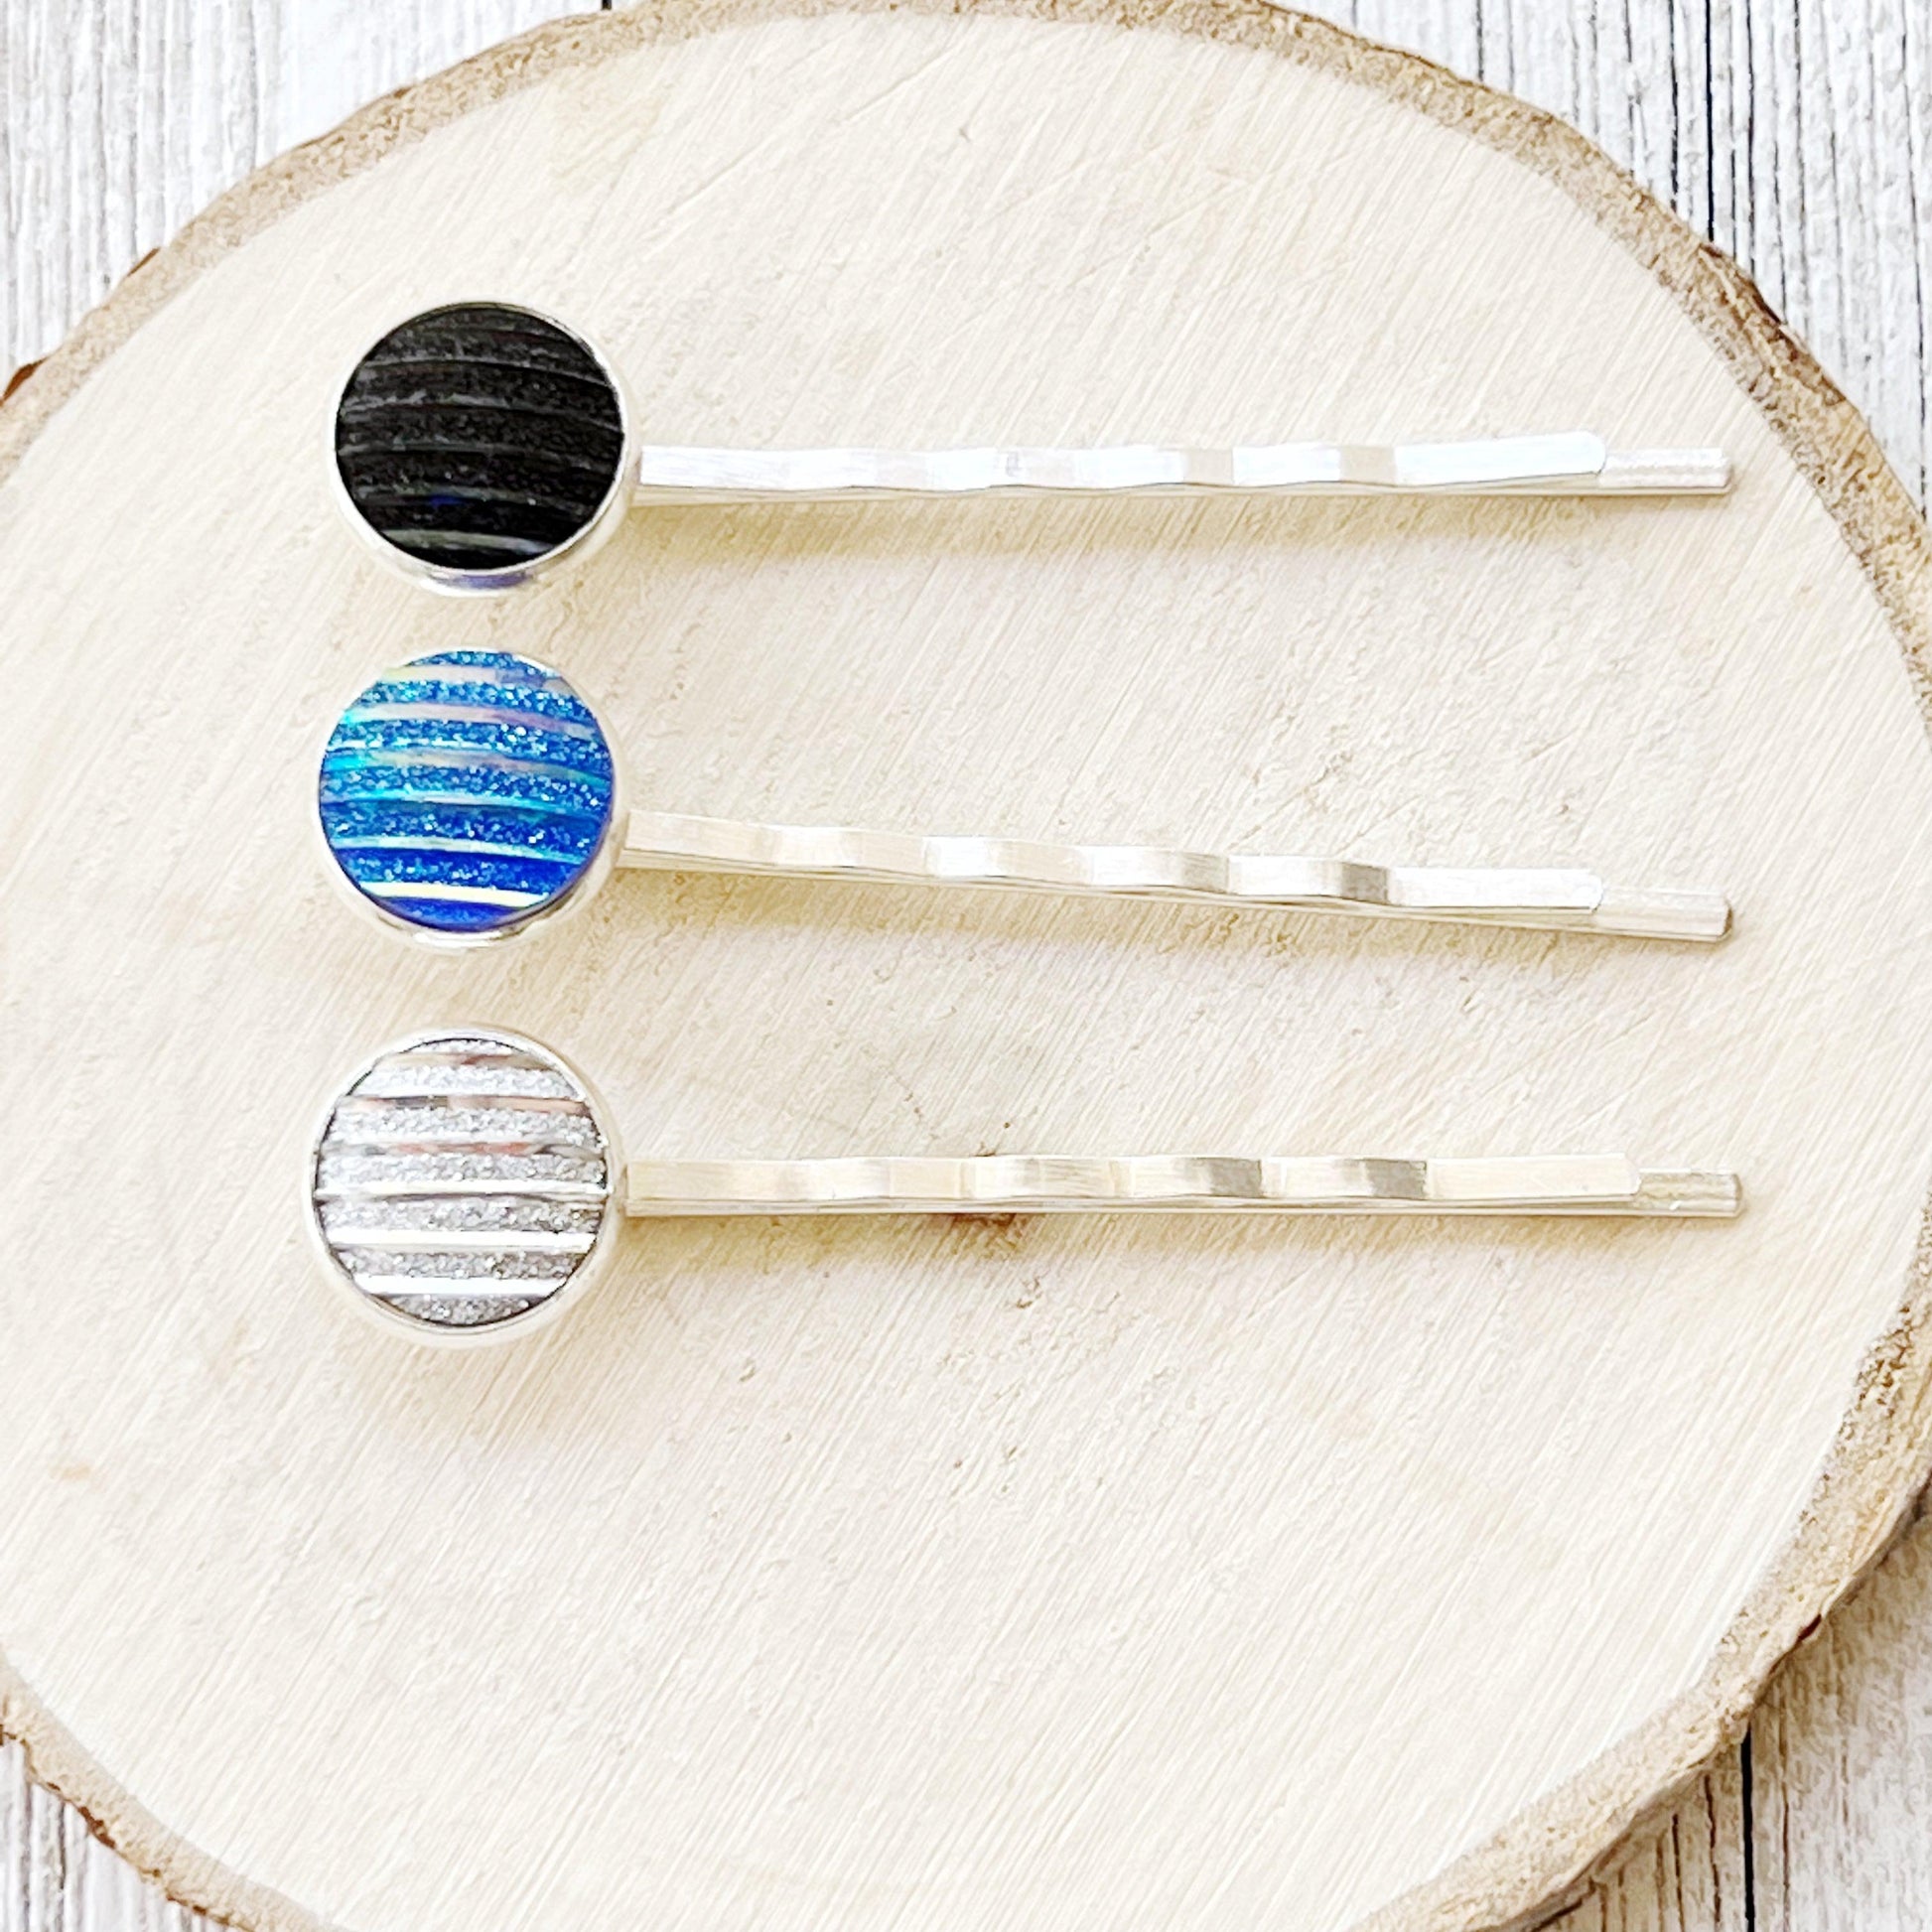 Blue, Black, & Silver Metallic Striped Hair Pins - Set of 3 Stylish Silver Hair Accessories